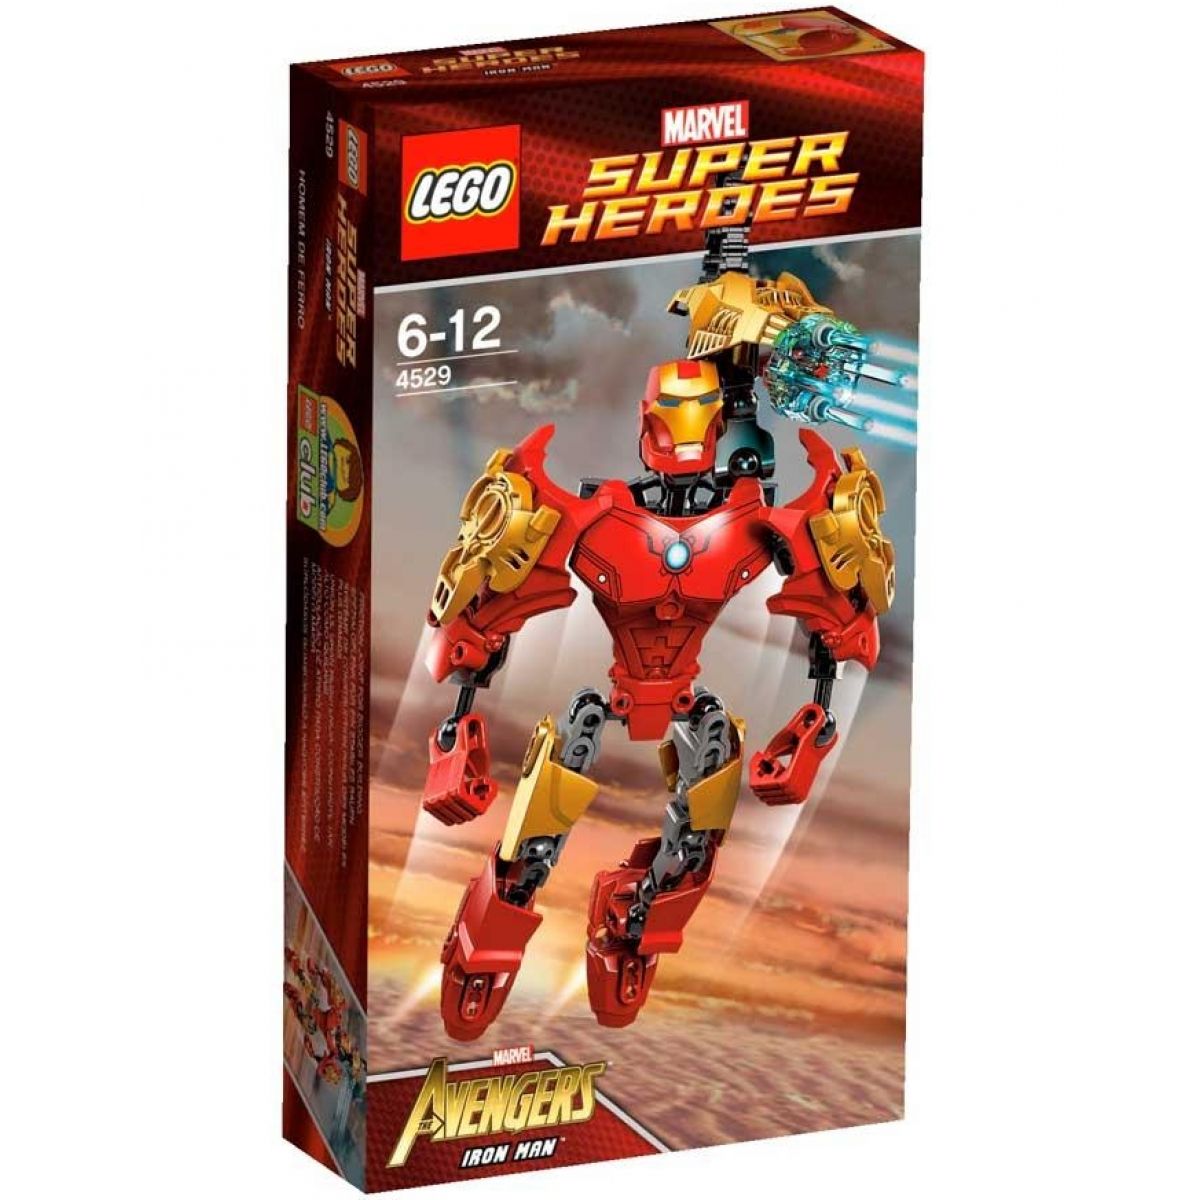 LEGO Super Heroes 4529 Iron Man